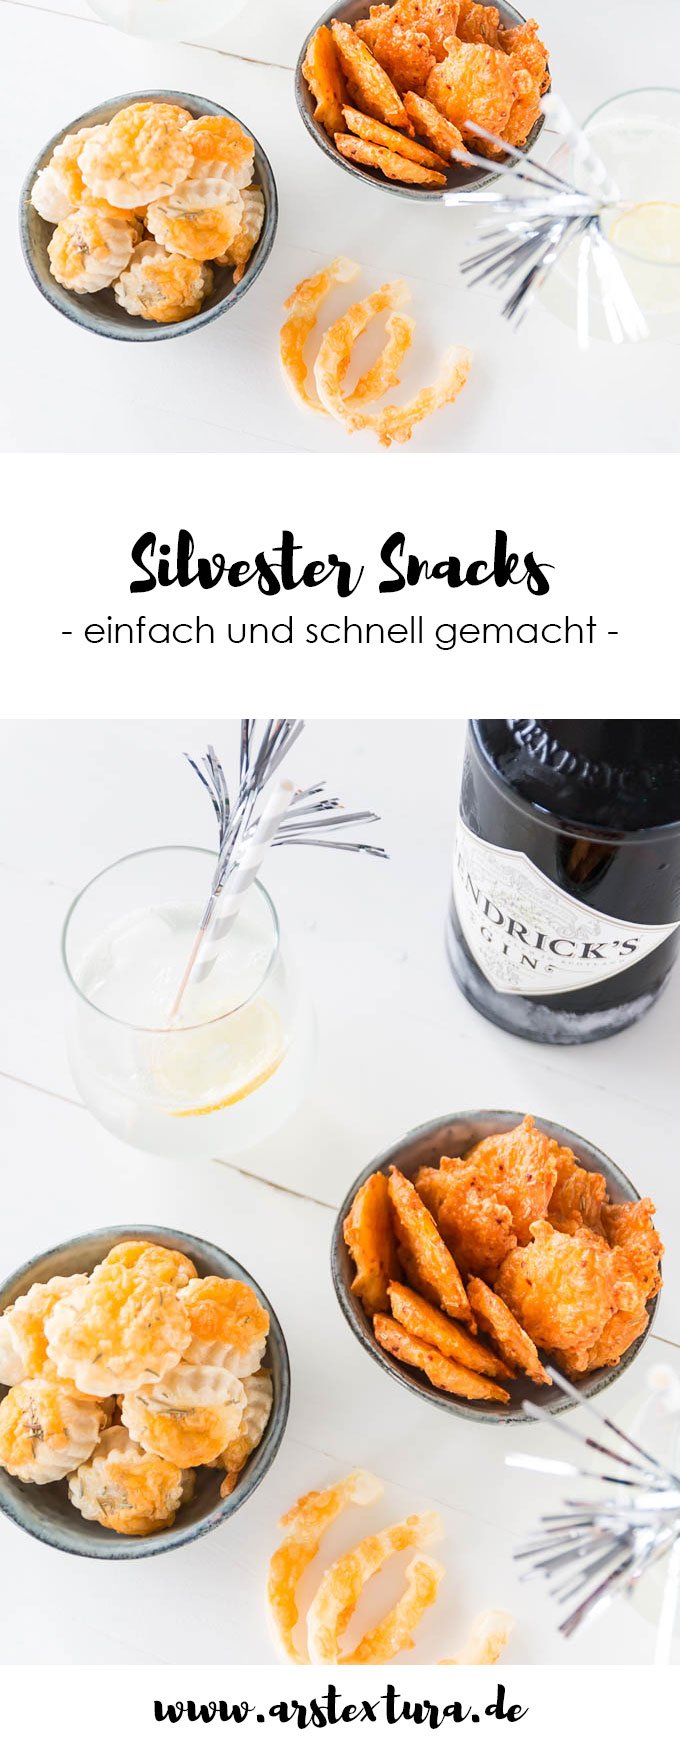 Silvester Snacks mit Blätterteig - Party Fingerfood  | ars textura - DIY Blog